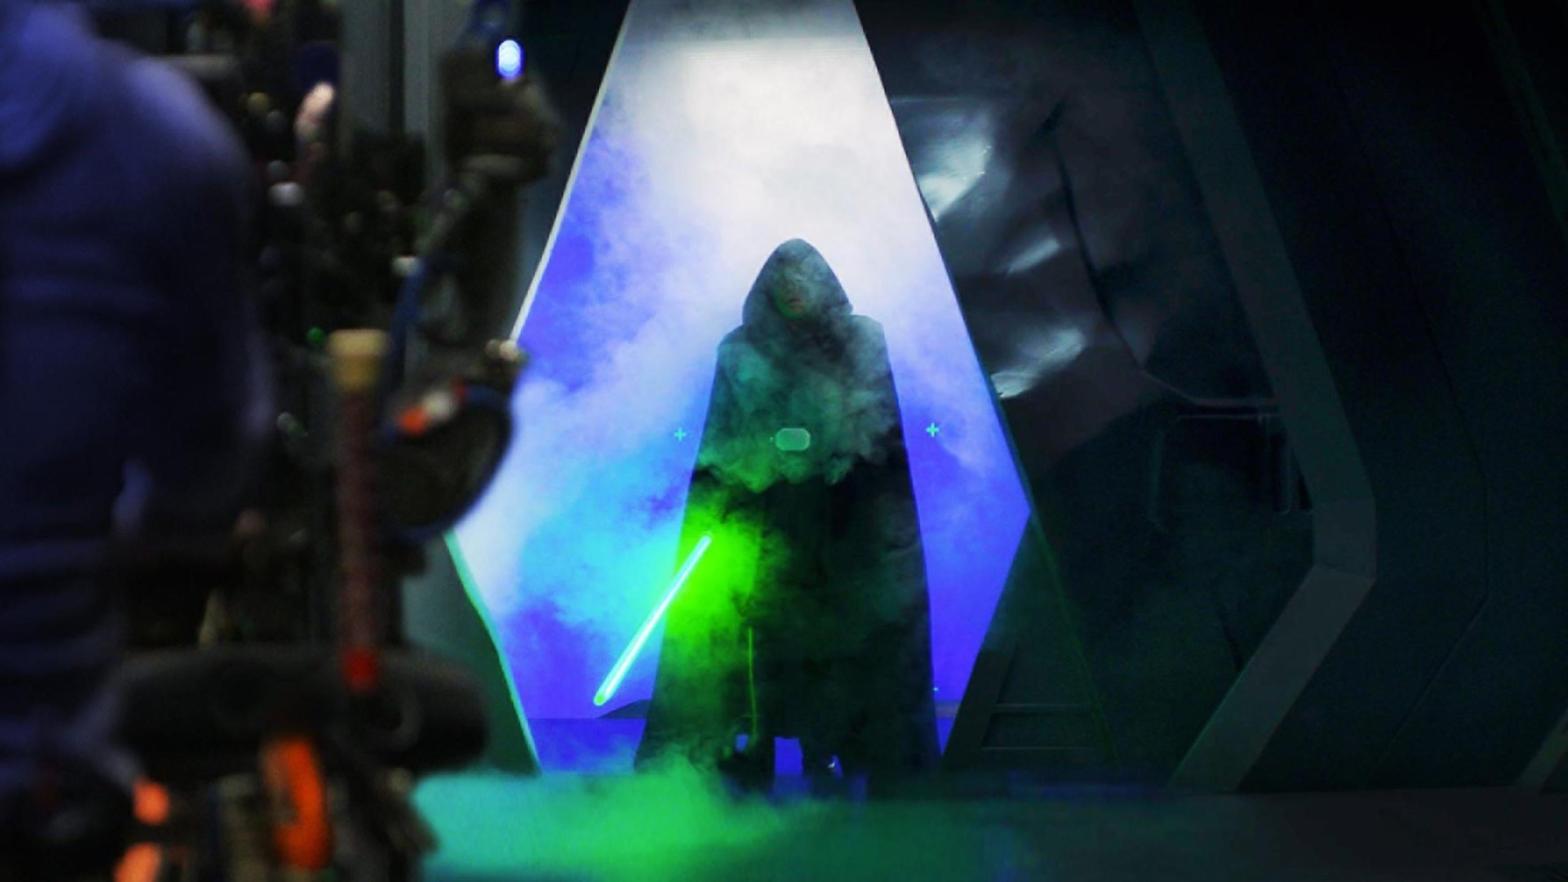 Lukę Skywalker emerges. (Photo: Disney Plus)